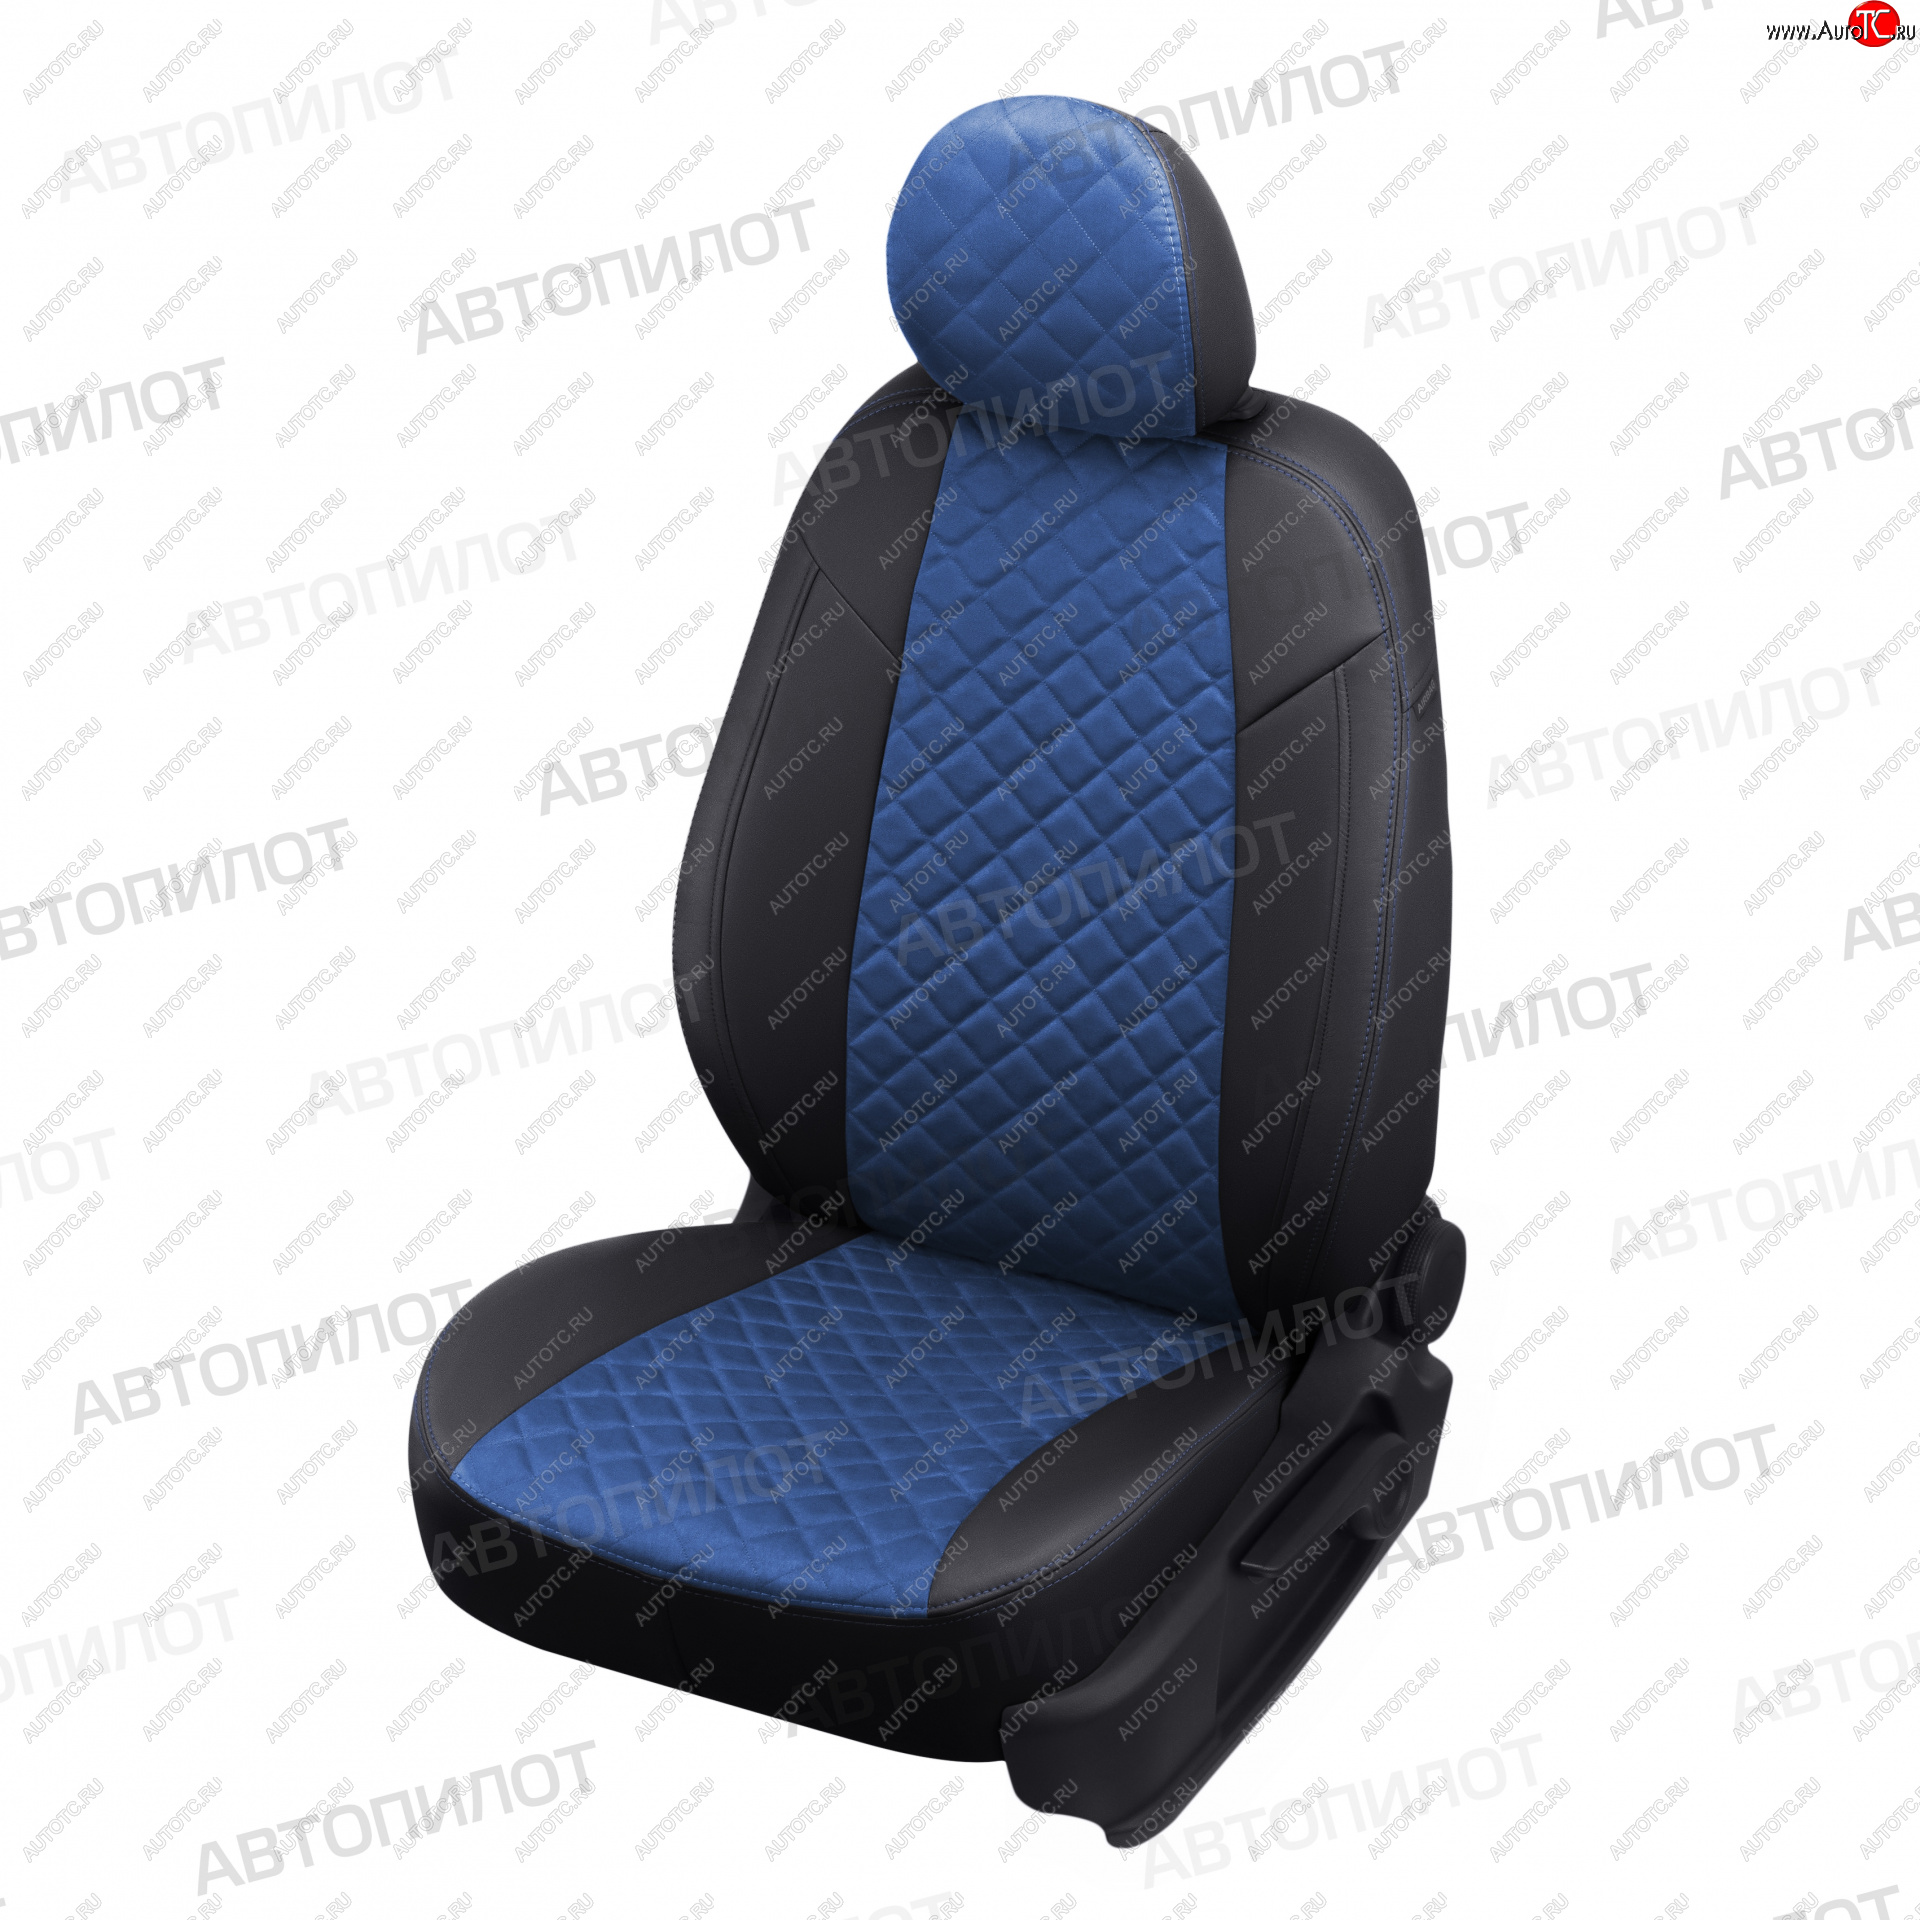 13 999 р. Чехлы сидений (экокожа/алькантара) Автопилот Ромб  Ford C-max  Mk1 (2003-2010) (черный/синий)